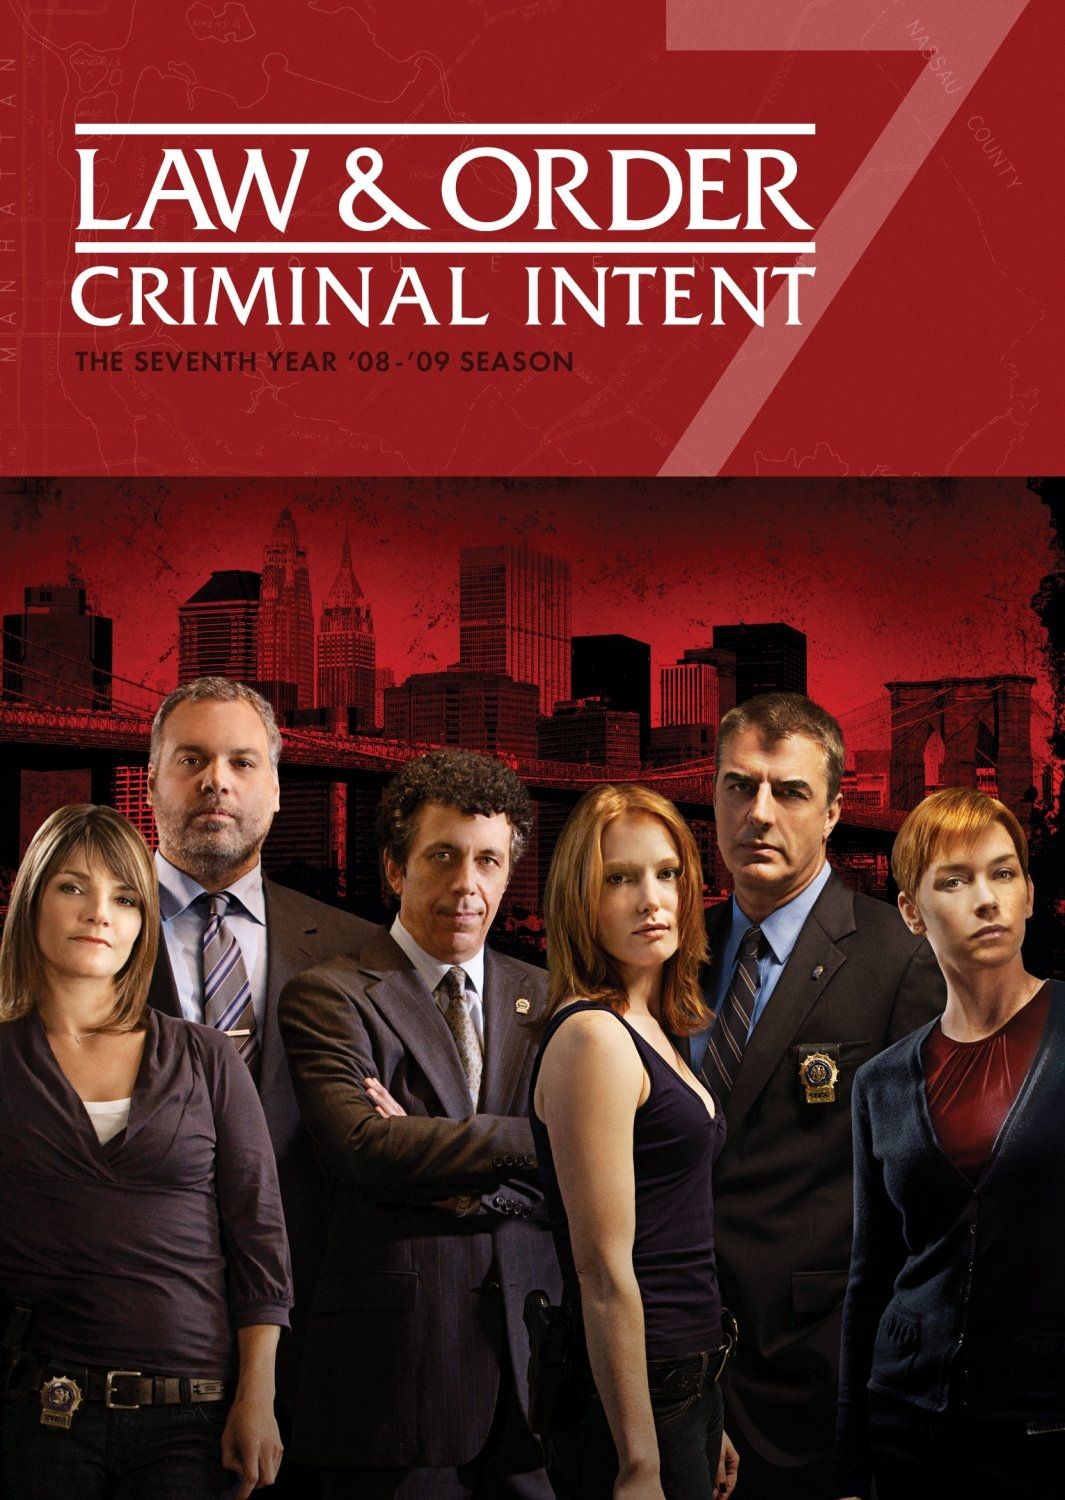 Law & Order: Criminal Intent seventh season poster 